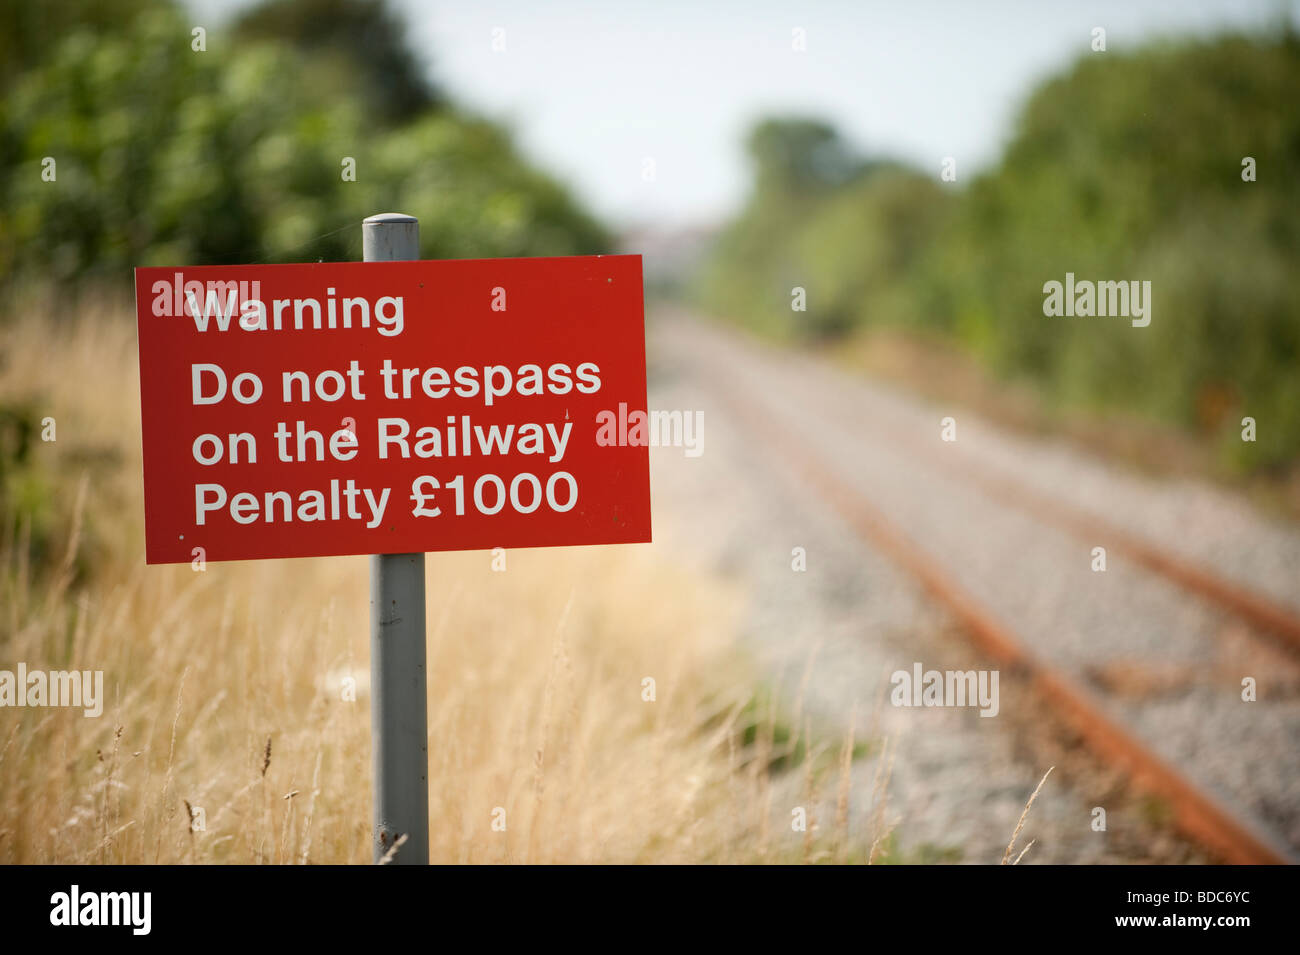 warning - Do not trespass on the Railway sign UK, penalty £1000 Stock Photo